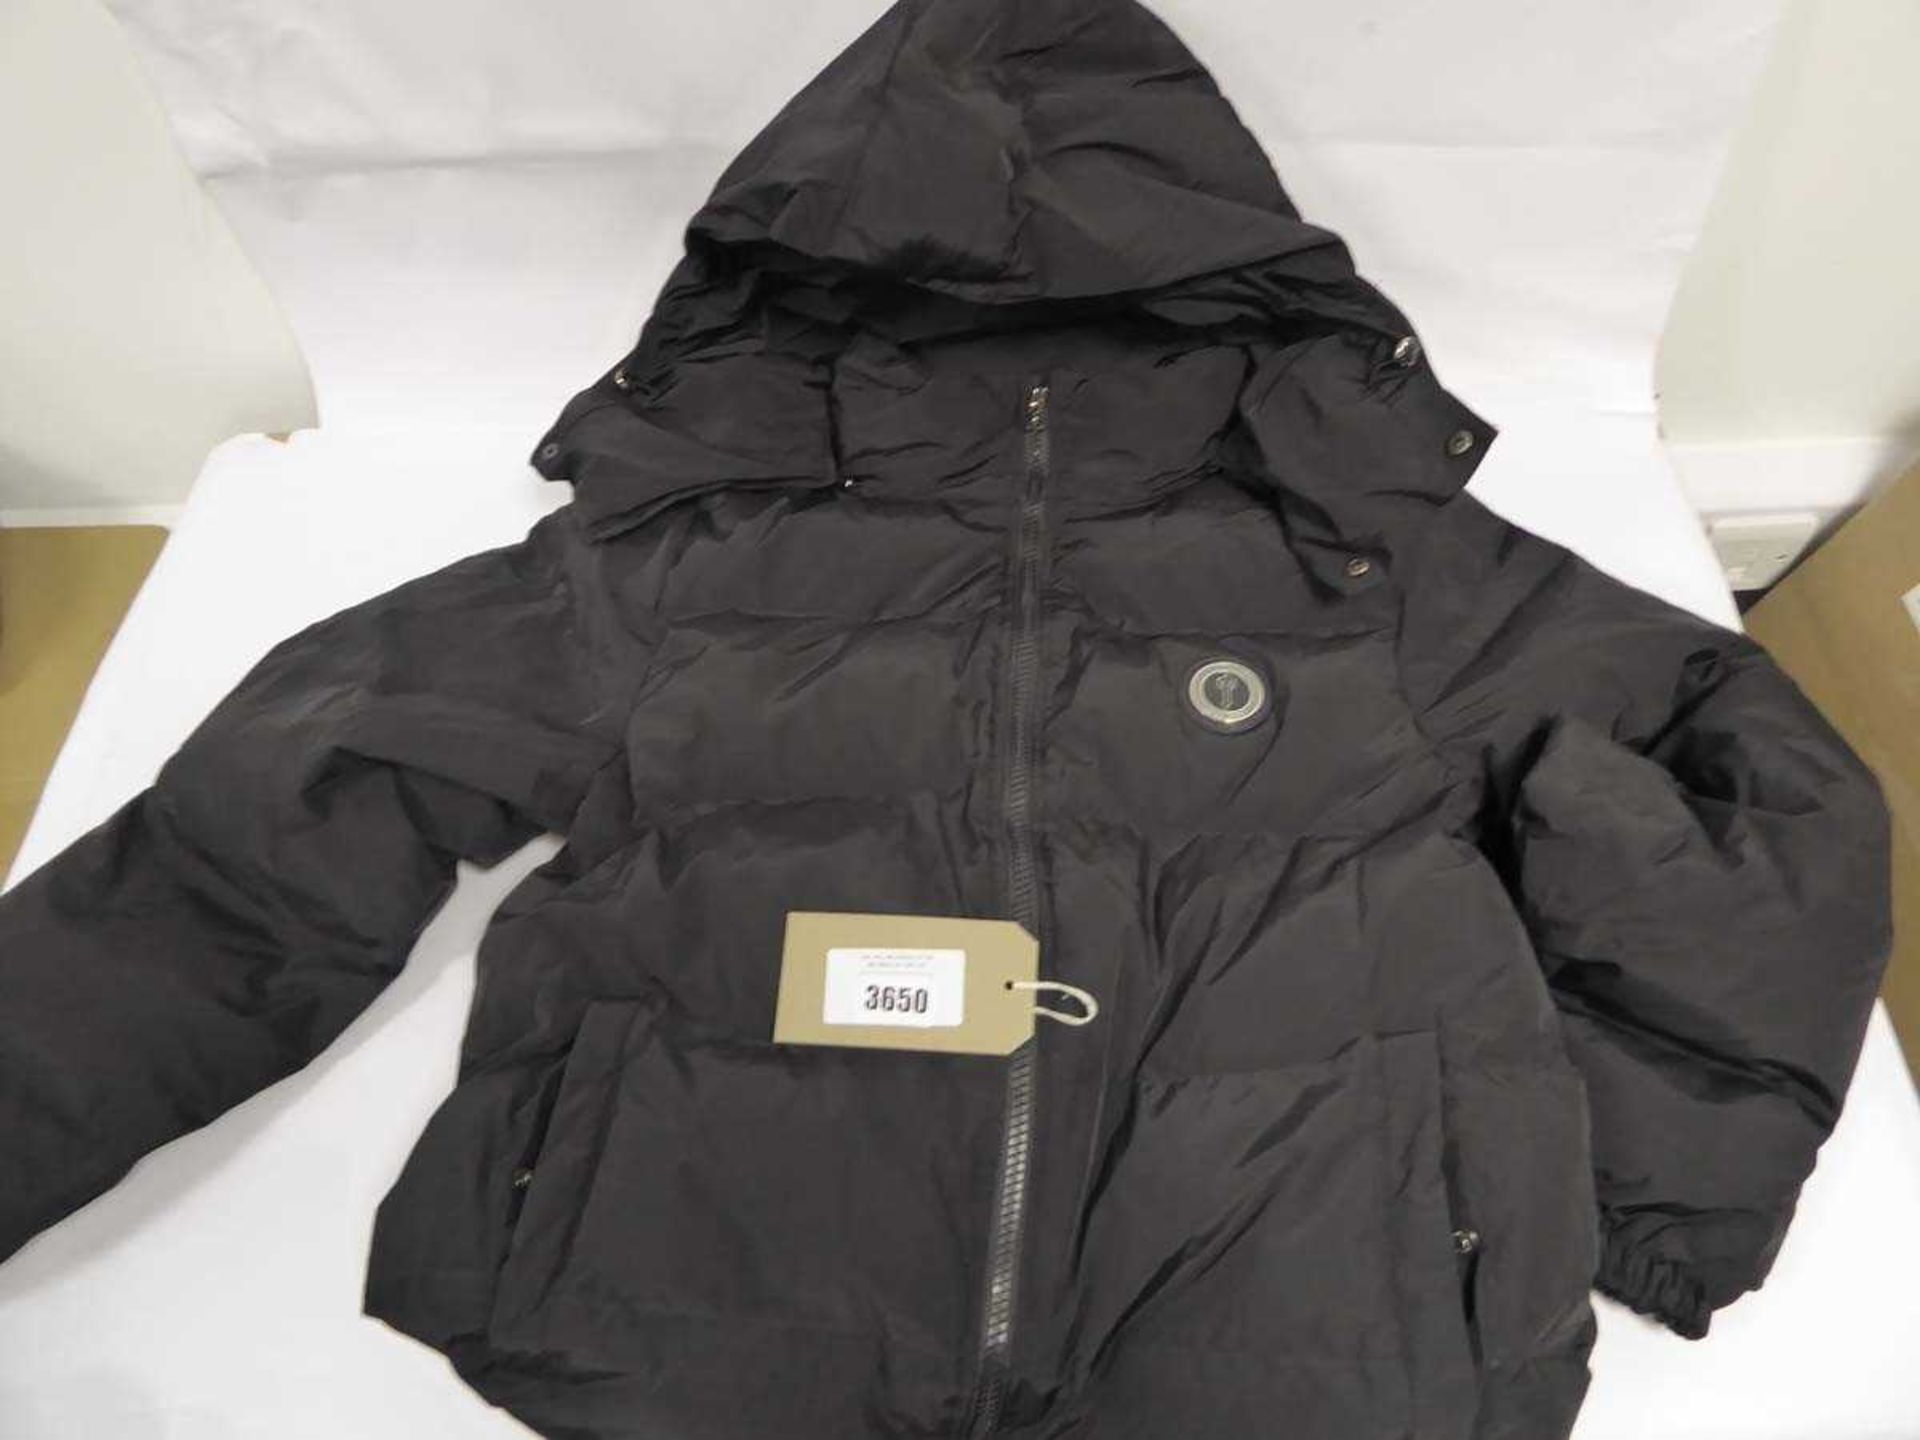 +VAT Trapstar puffer jacket in black, size medium (bagged)